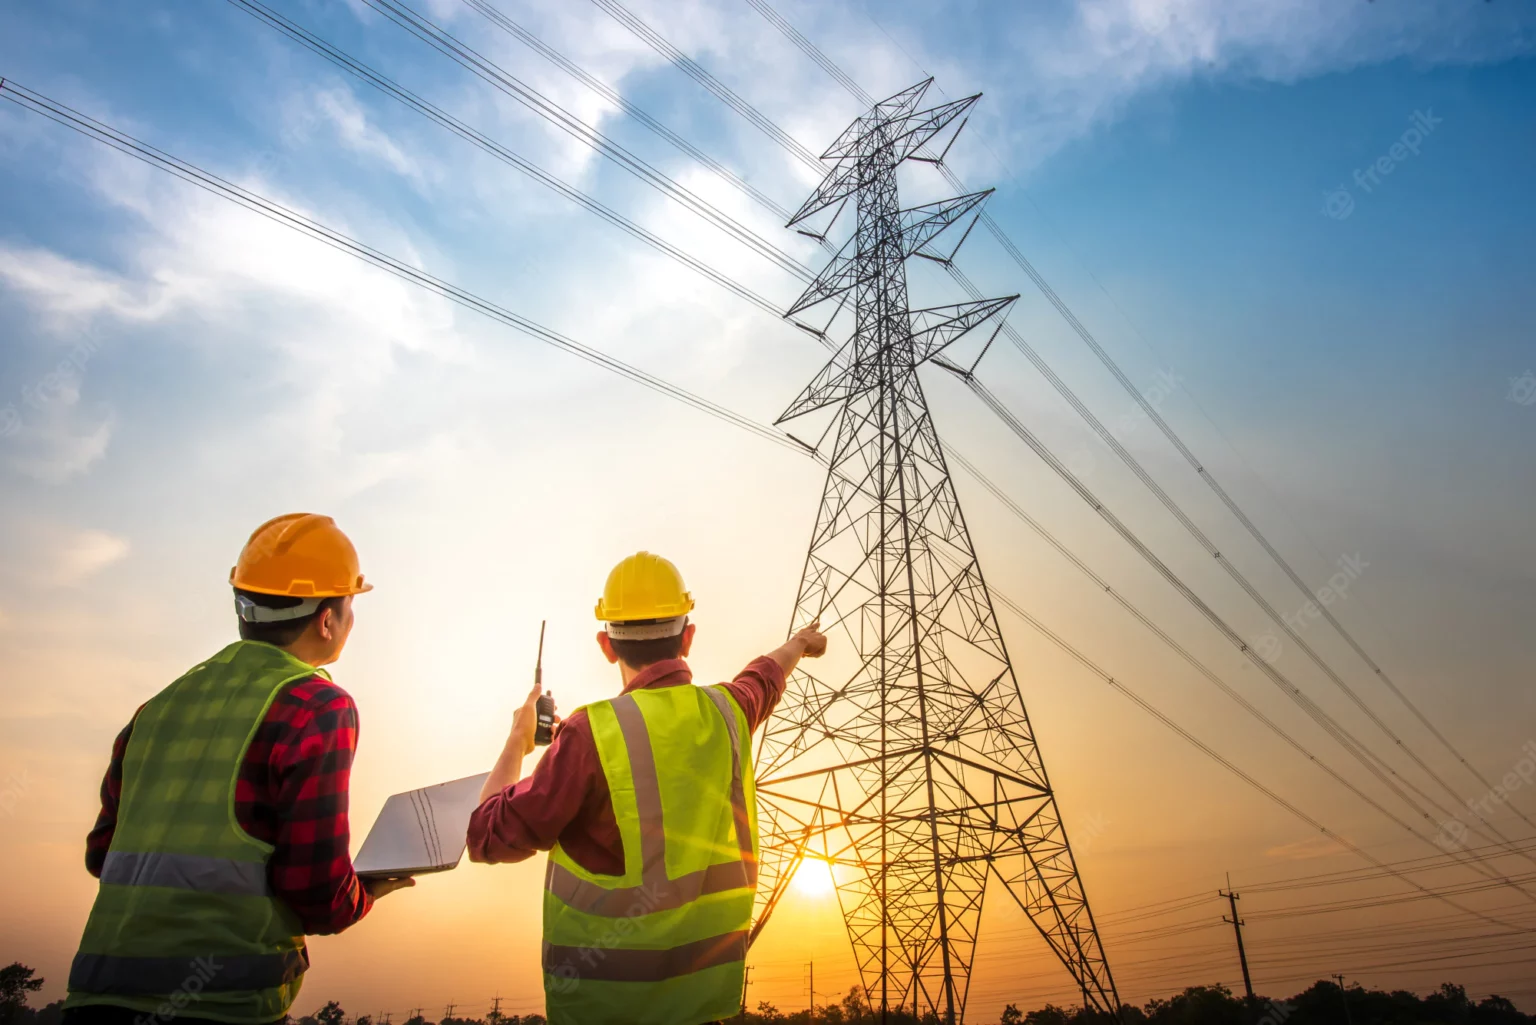 Is Public Utilities a Good Career Path